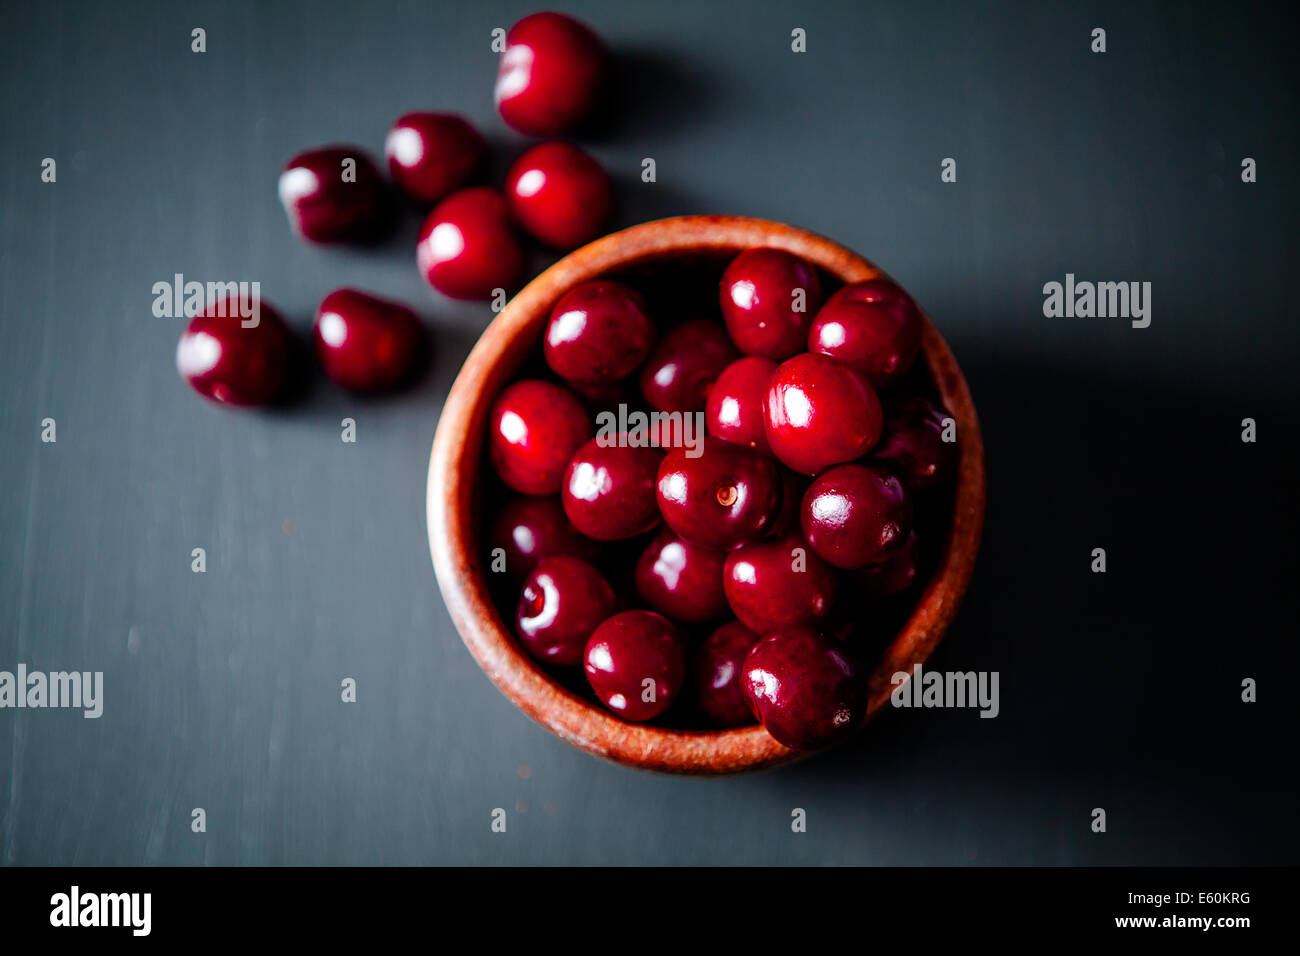 bowl of red cherries Stock Photo